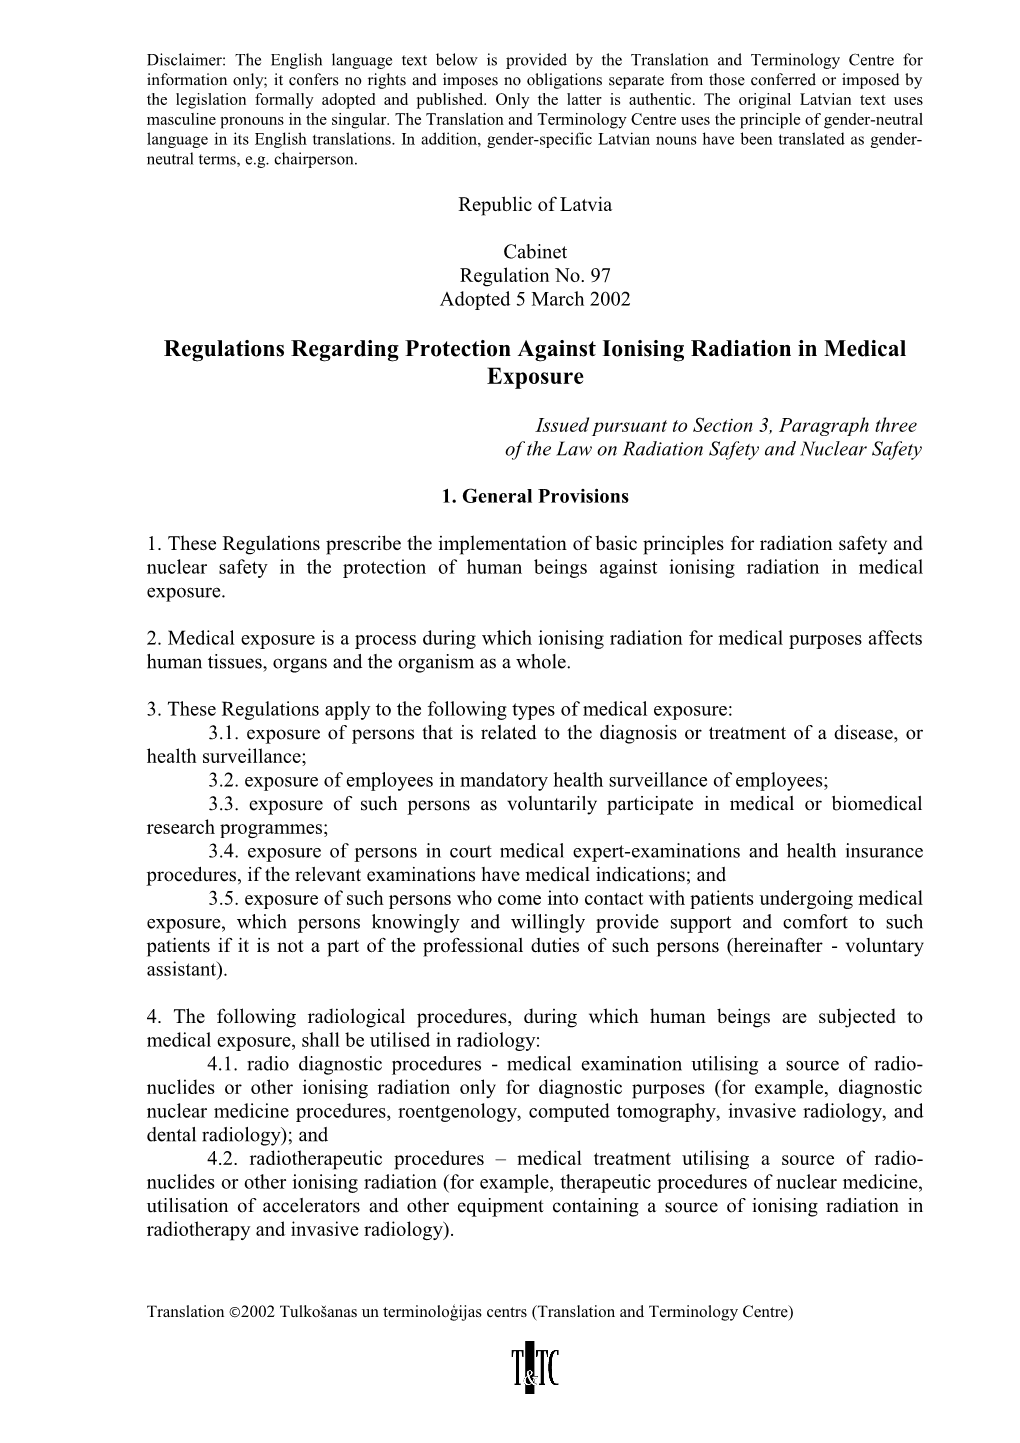 Regulations Regarding Protection Against Ionising Radiation in Medical Exposure